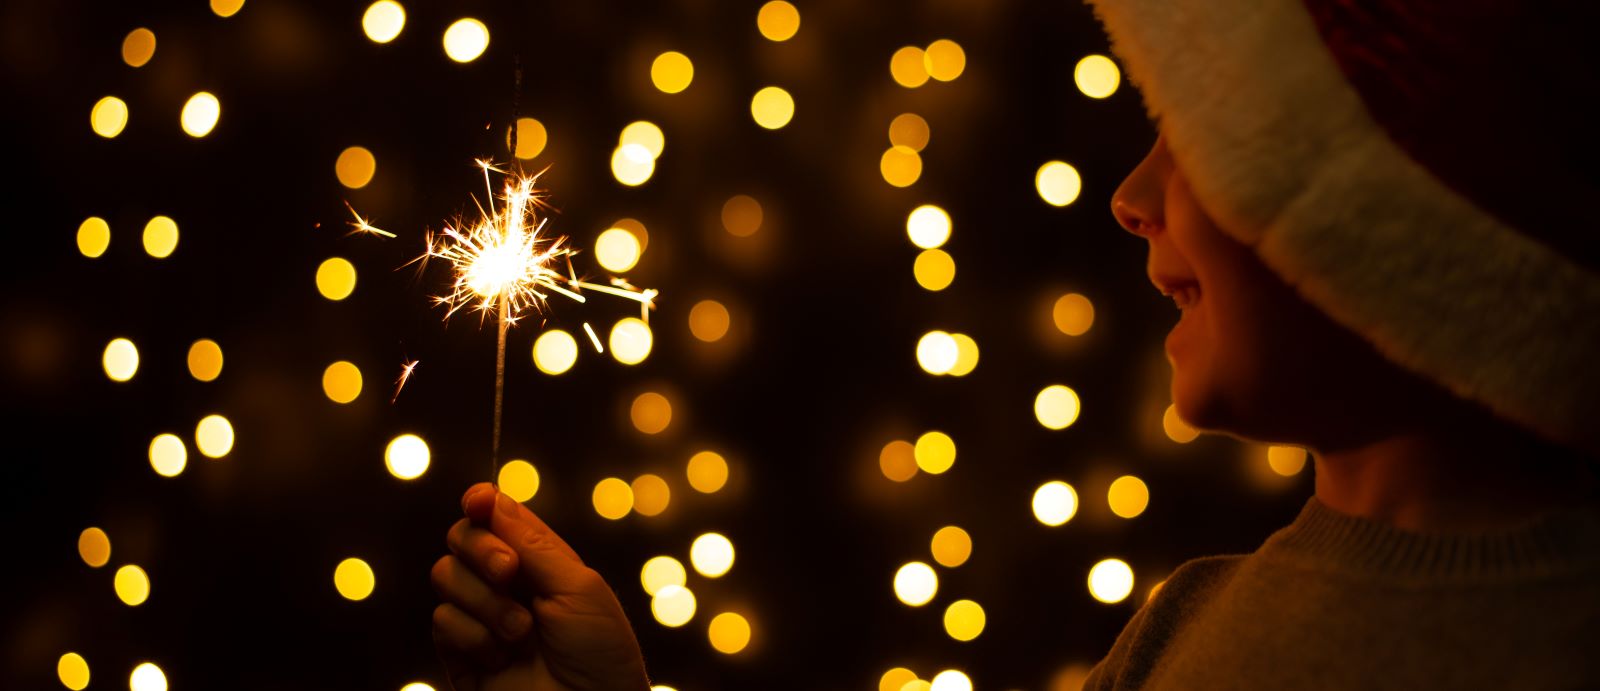 child holding sparkler at Christmas lights show